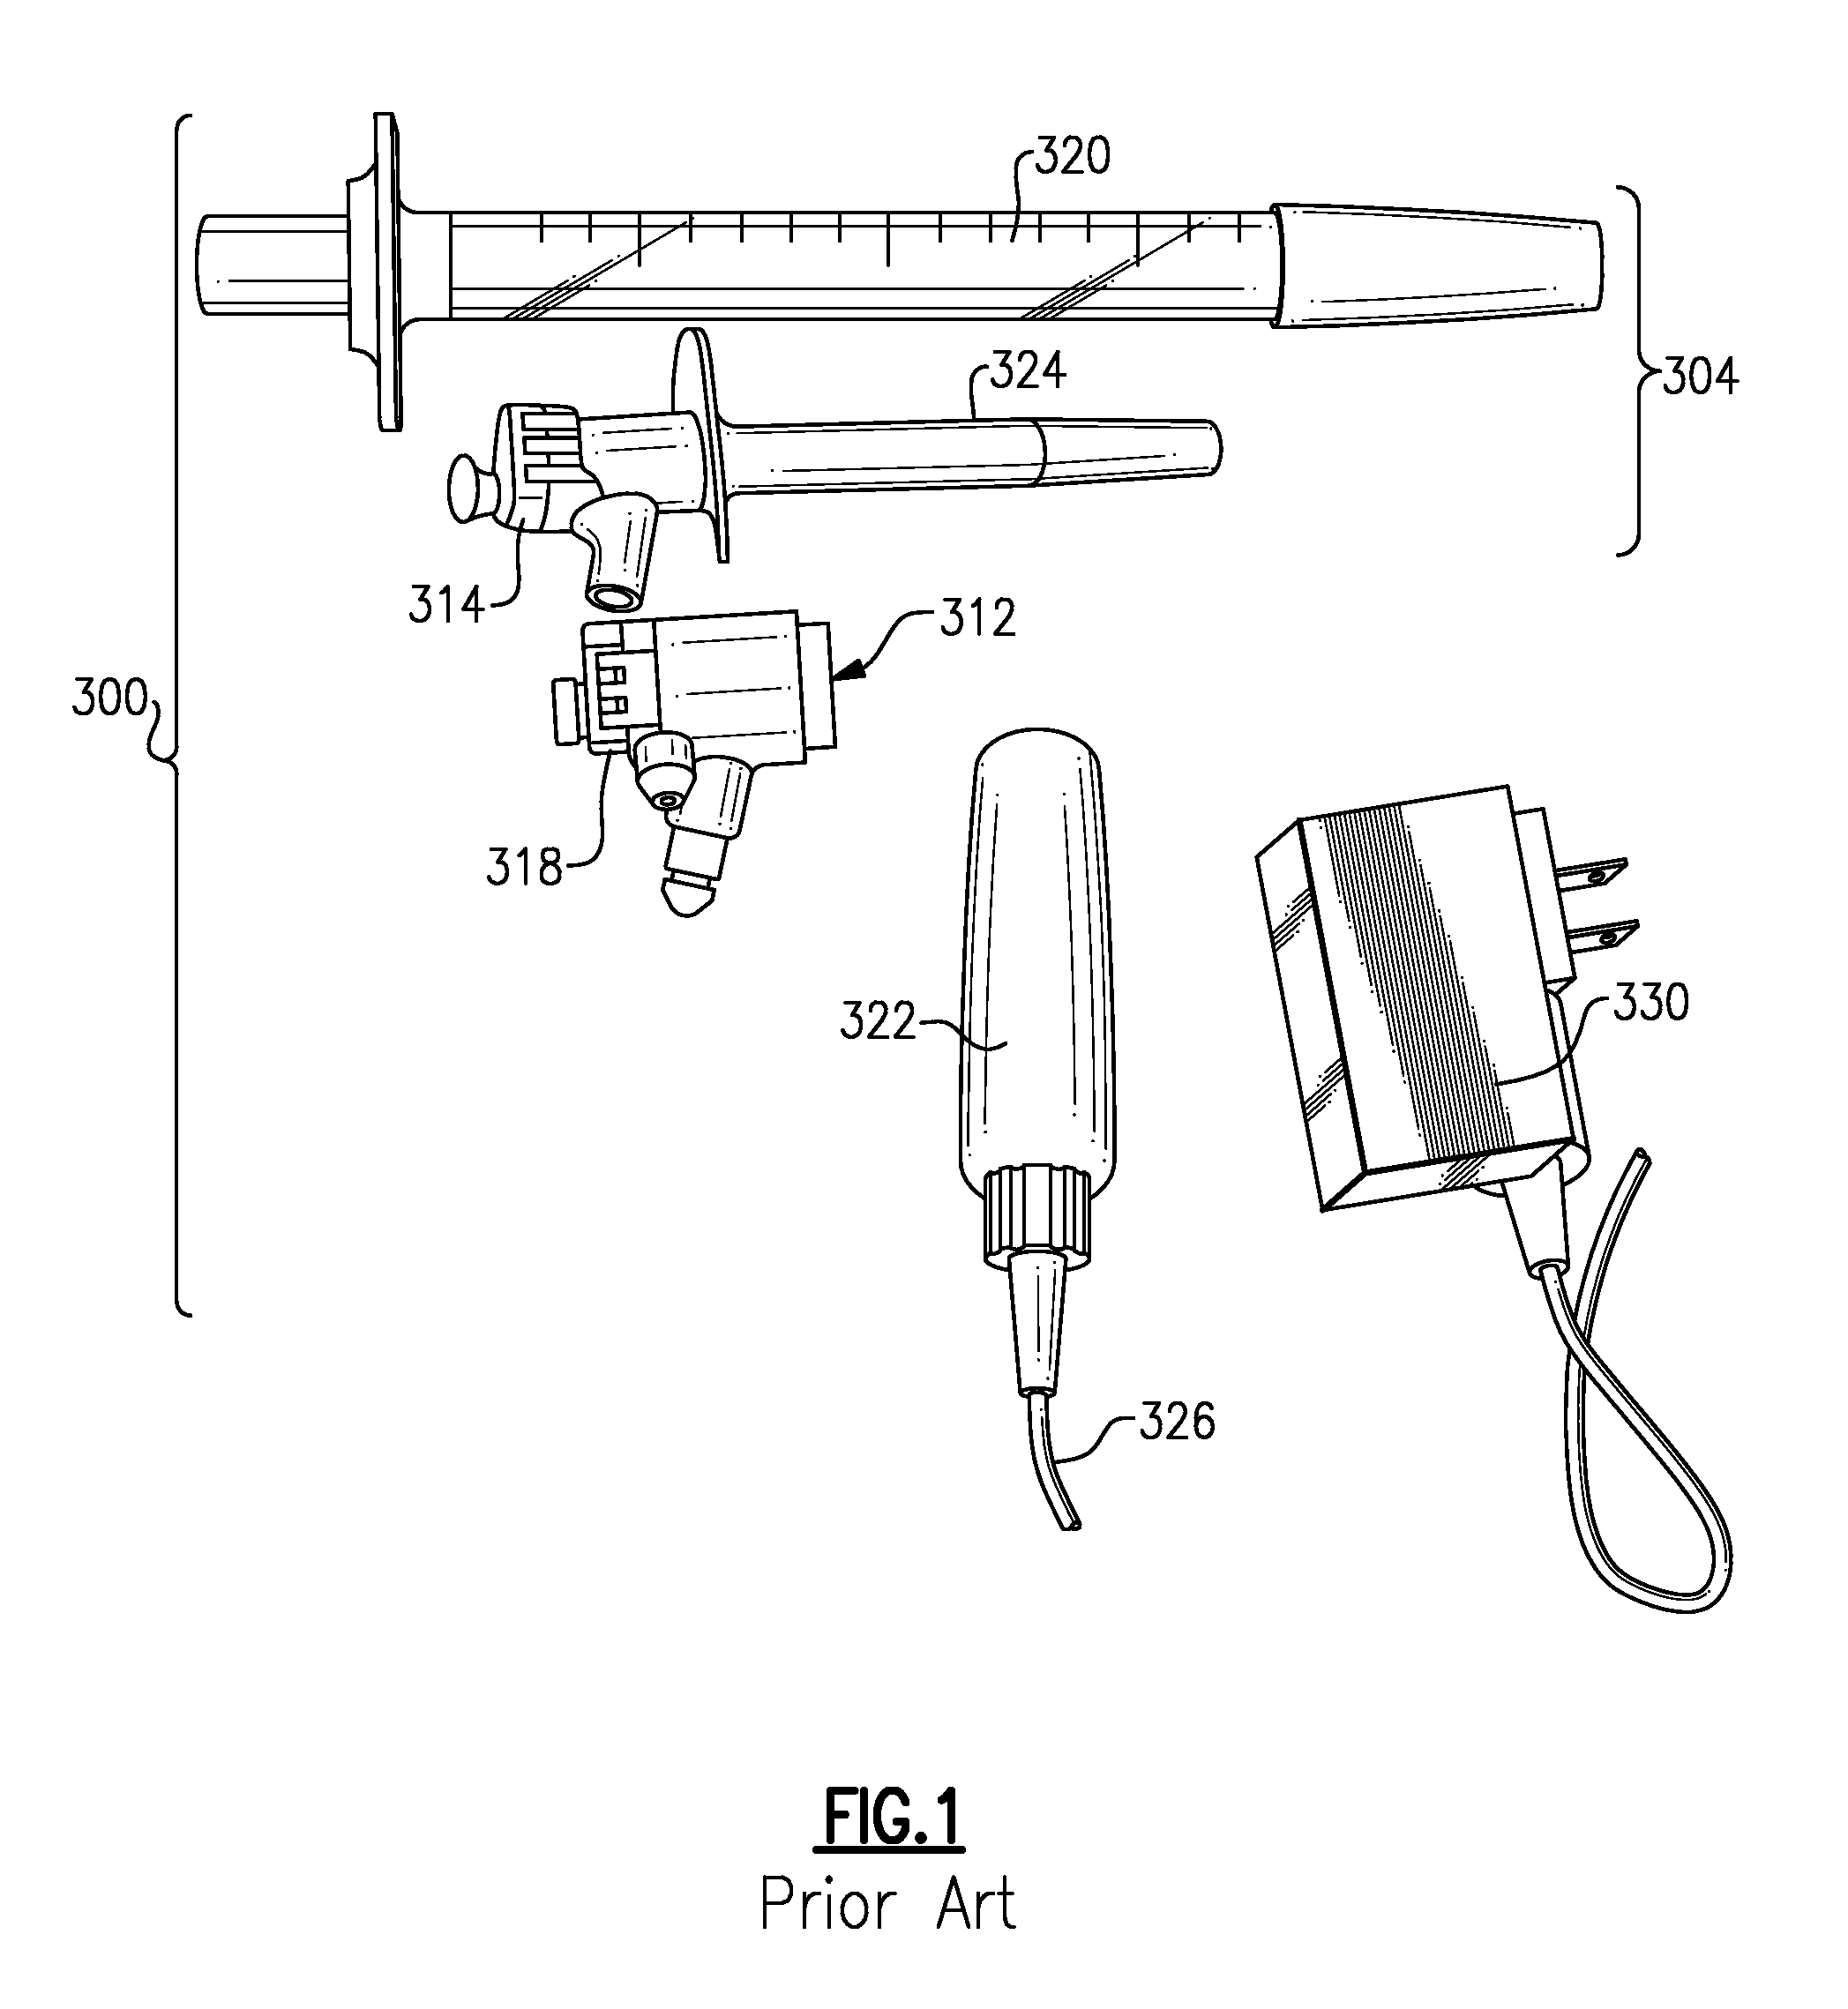 Medical diagnostic instrument having portable illuminator